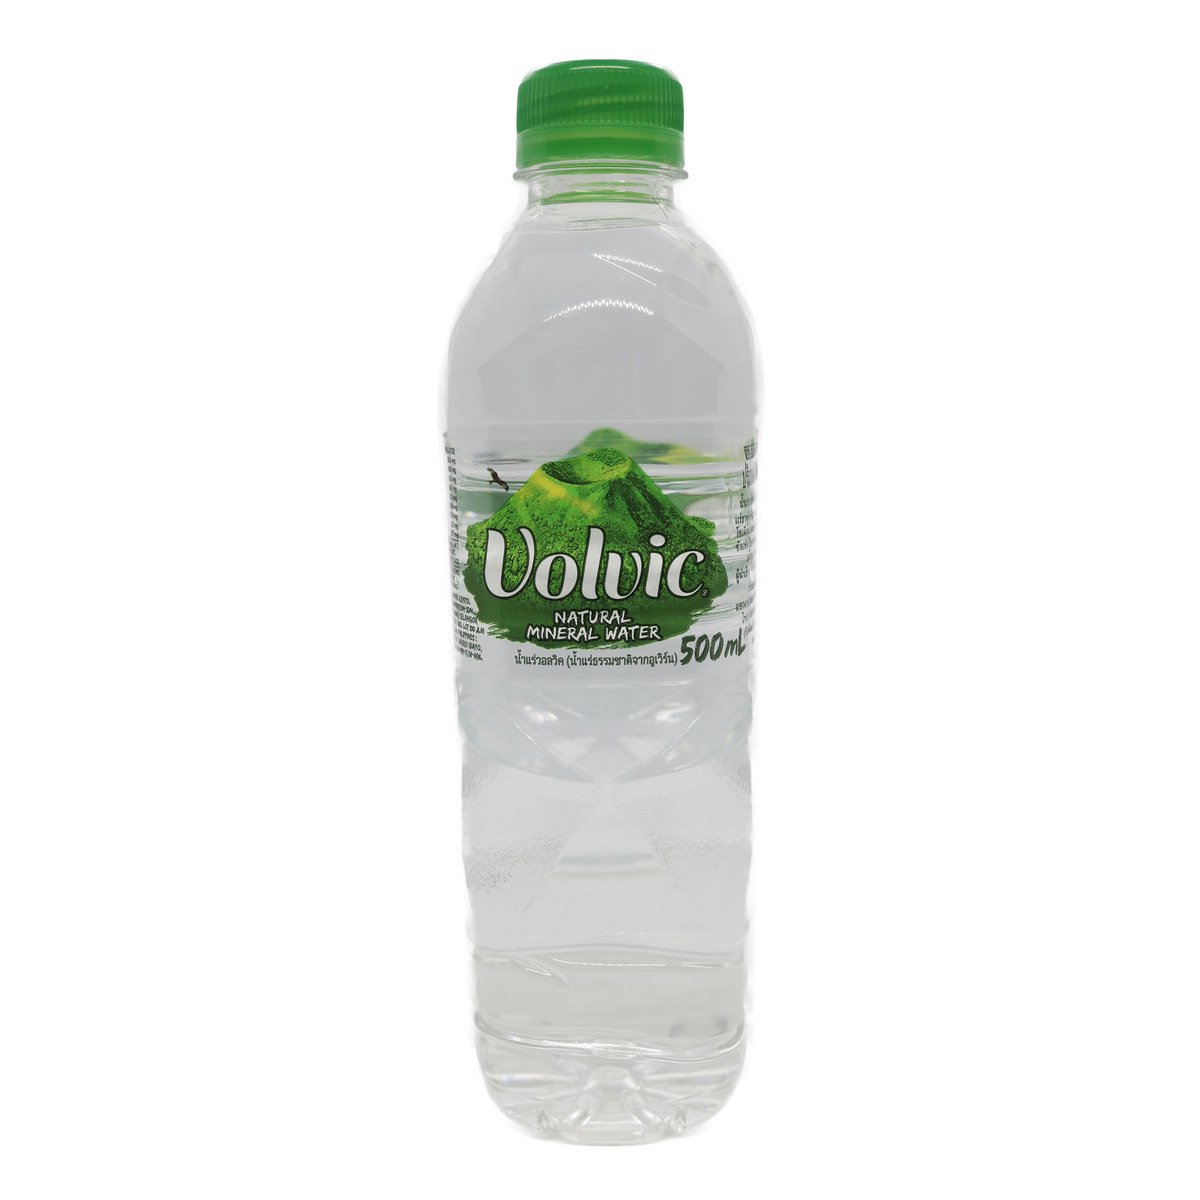 Volvic Mineral Water 500ml